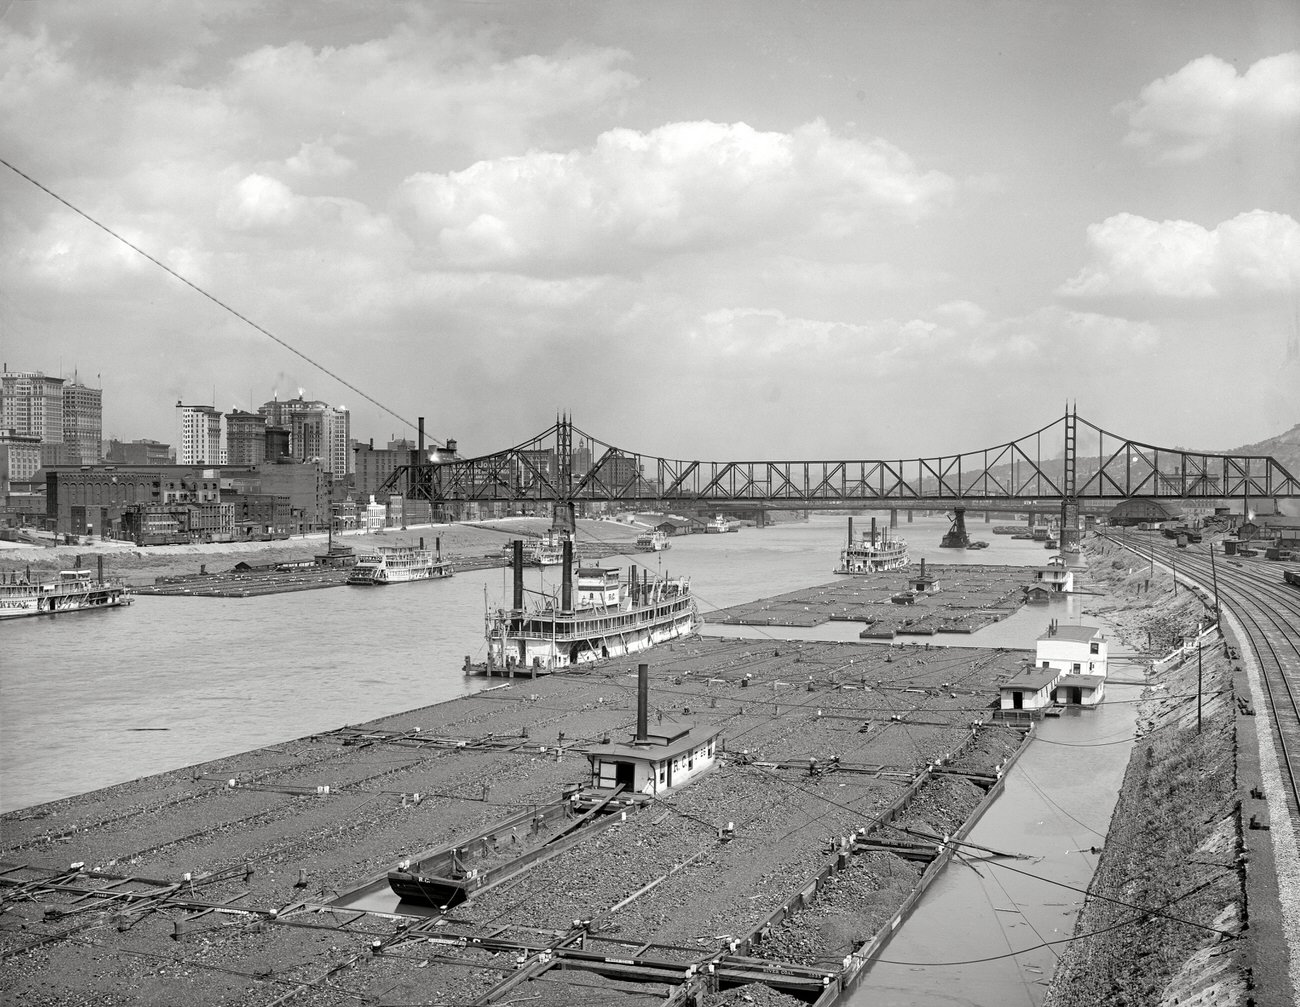 A Coal Fleet in Pittsburgh, Pennsylvania, 1910